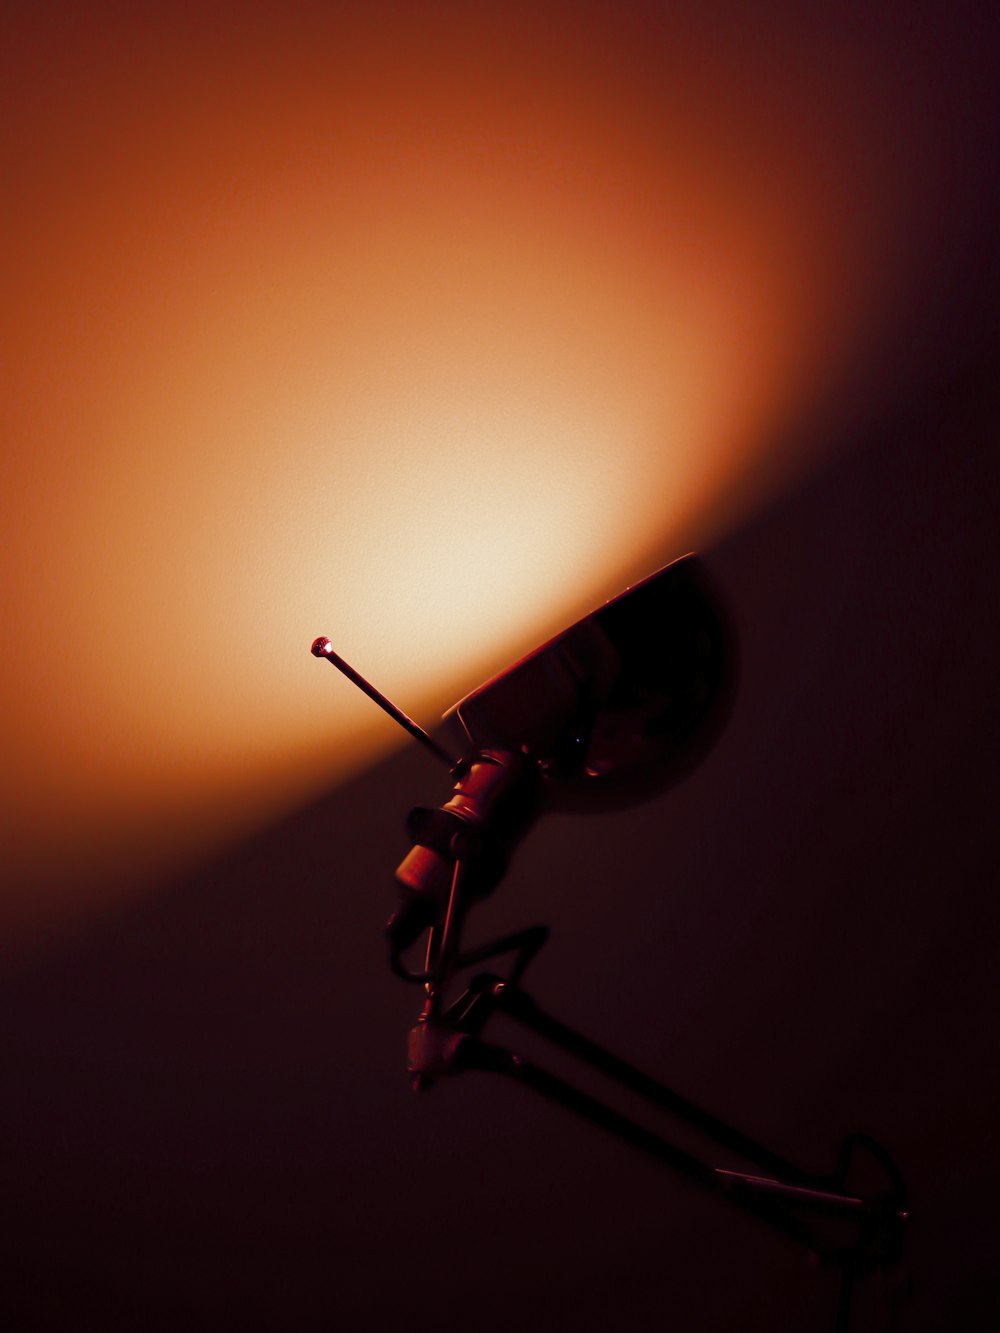 a close up of a street light on a dark background